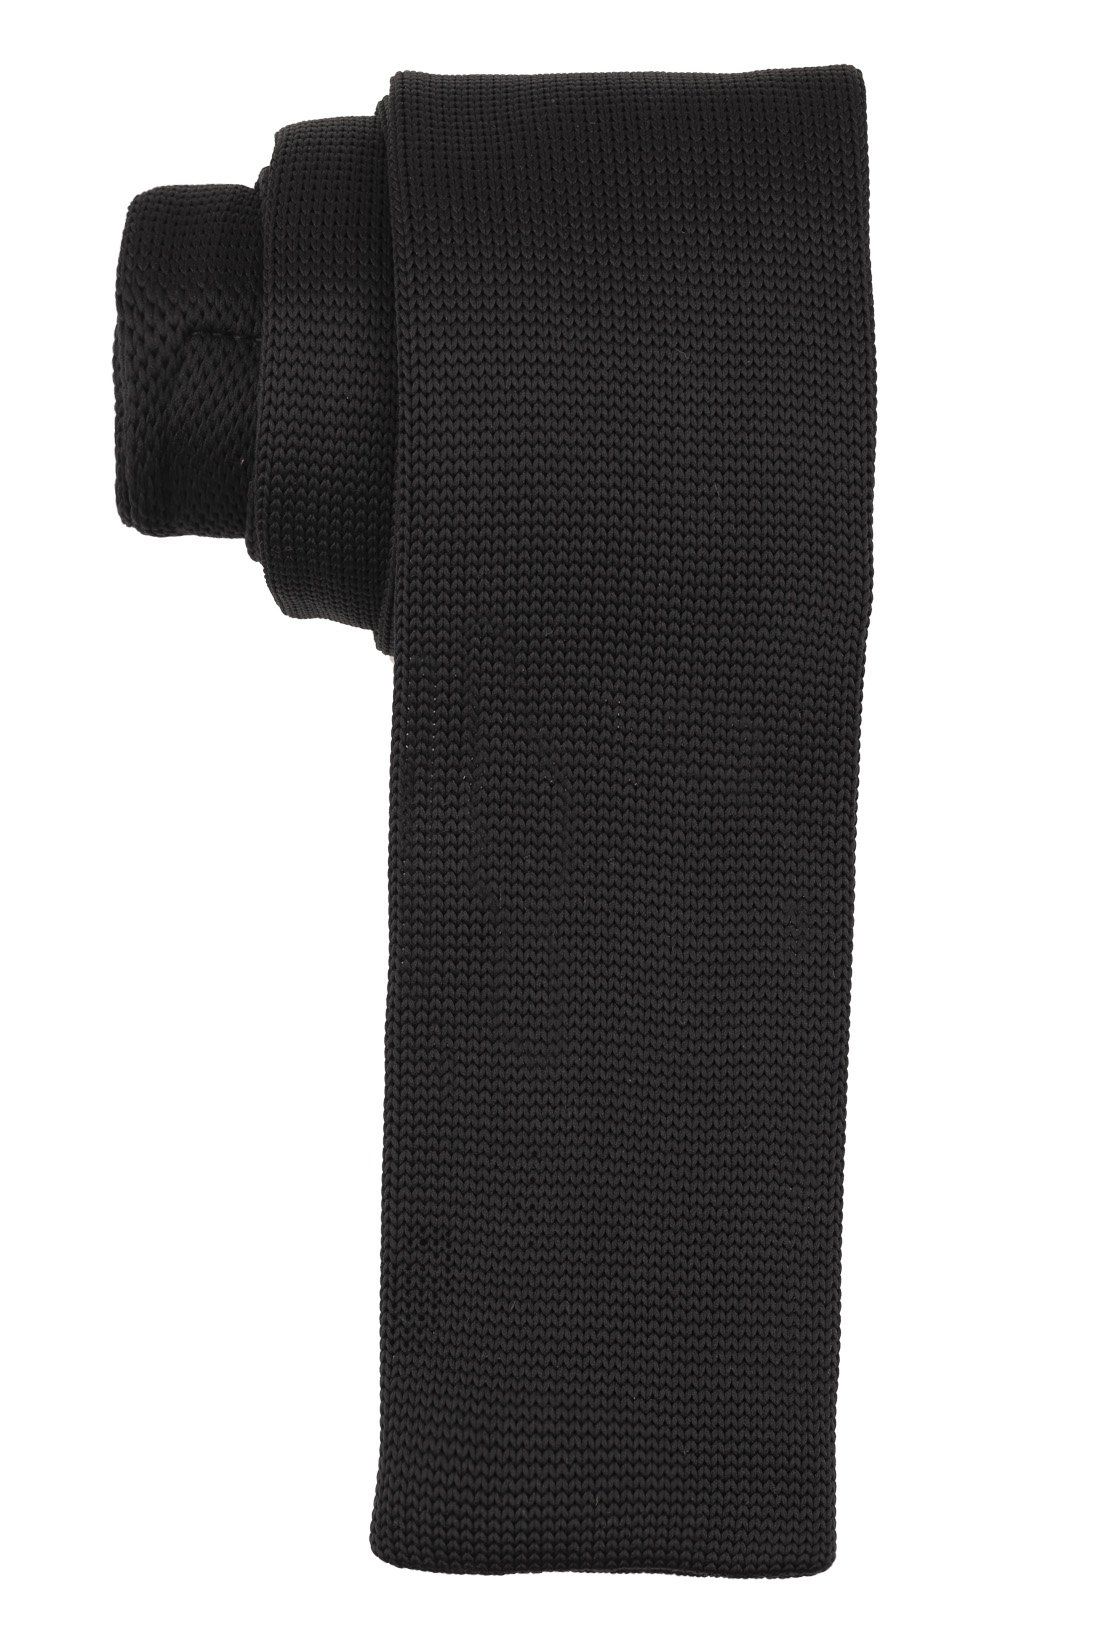 Buy Solid Black Knitted Necktie - the tie hub